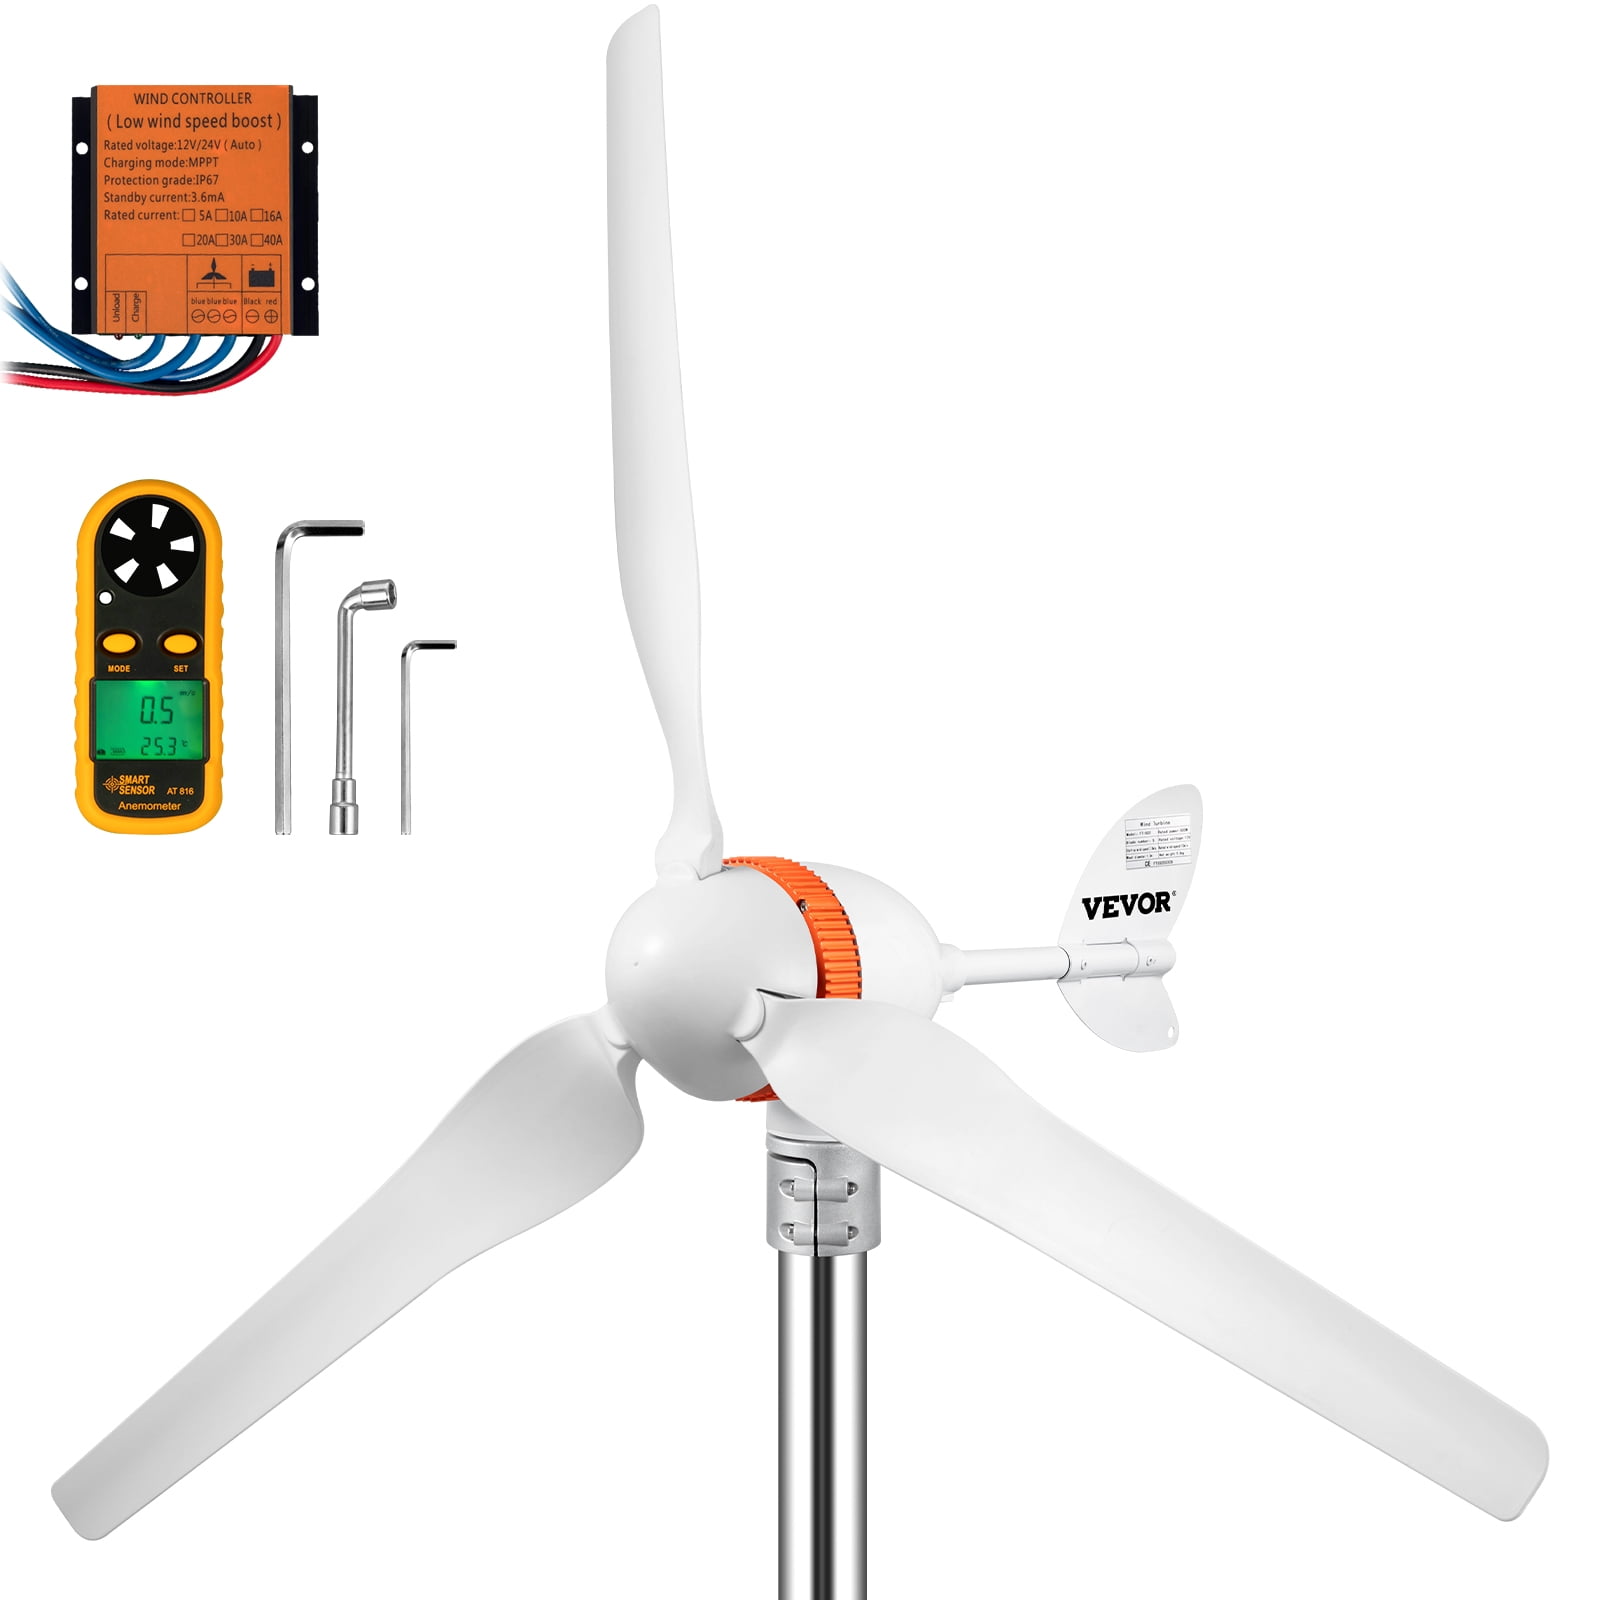 PIKASOLA Wind Turbine Charge Controller Mini Wind Turbine Generator Controller IP67 Waterproof 12V/24V Automatic Controller Suitable for 400Watt 500Watt 600Watt Wind Turbine System